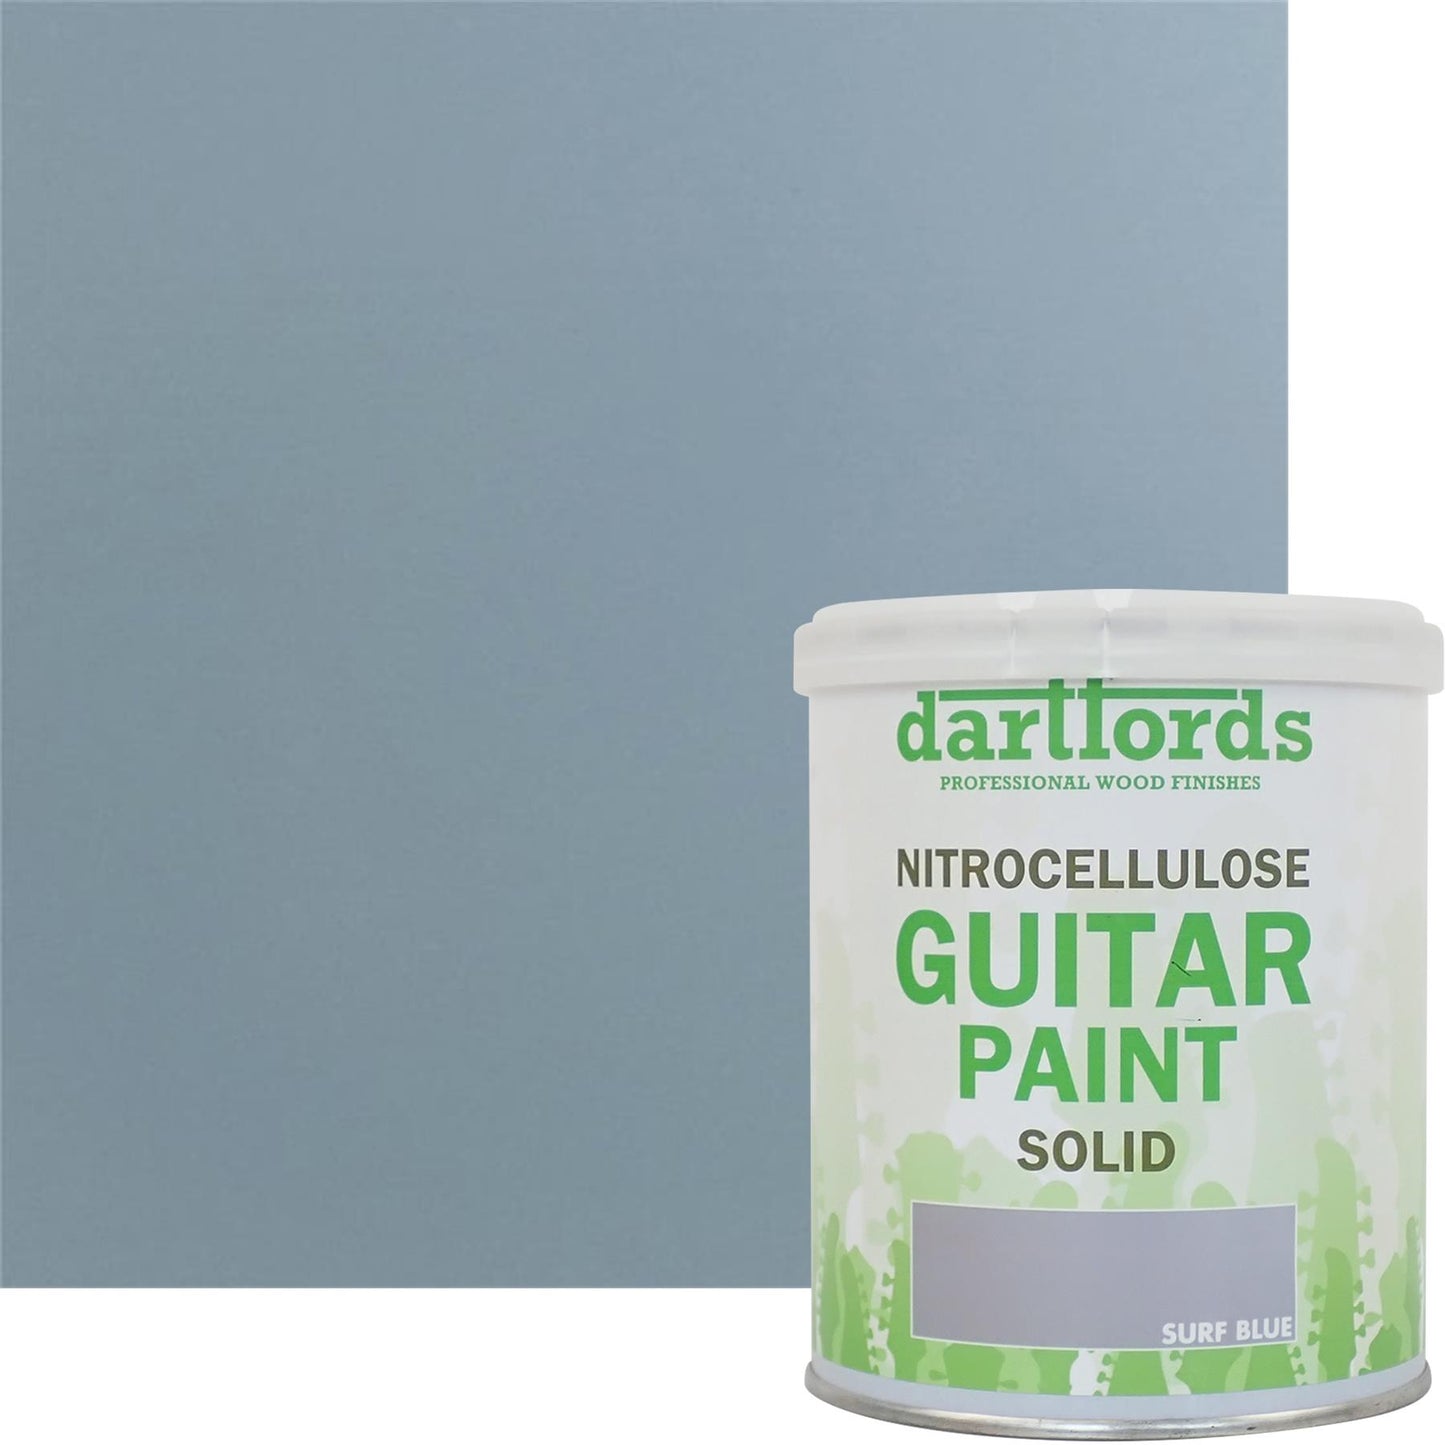 dartfords Surf Blue Nitrocellulose Guitar Paint - 1 litre Tin